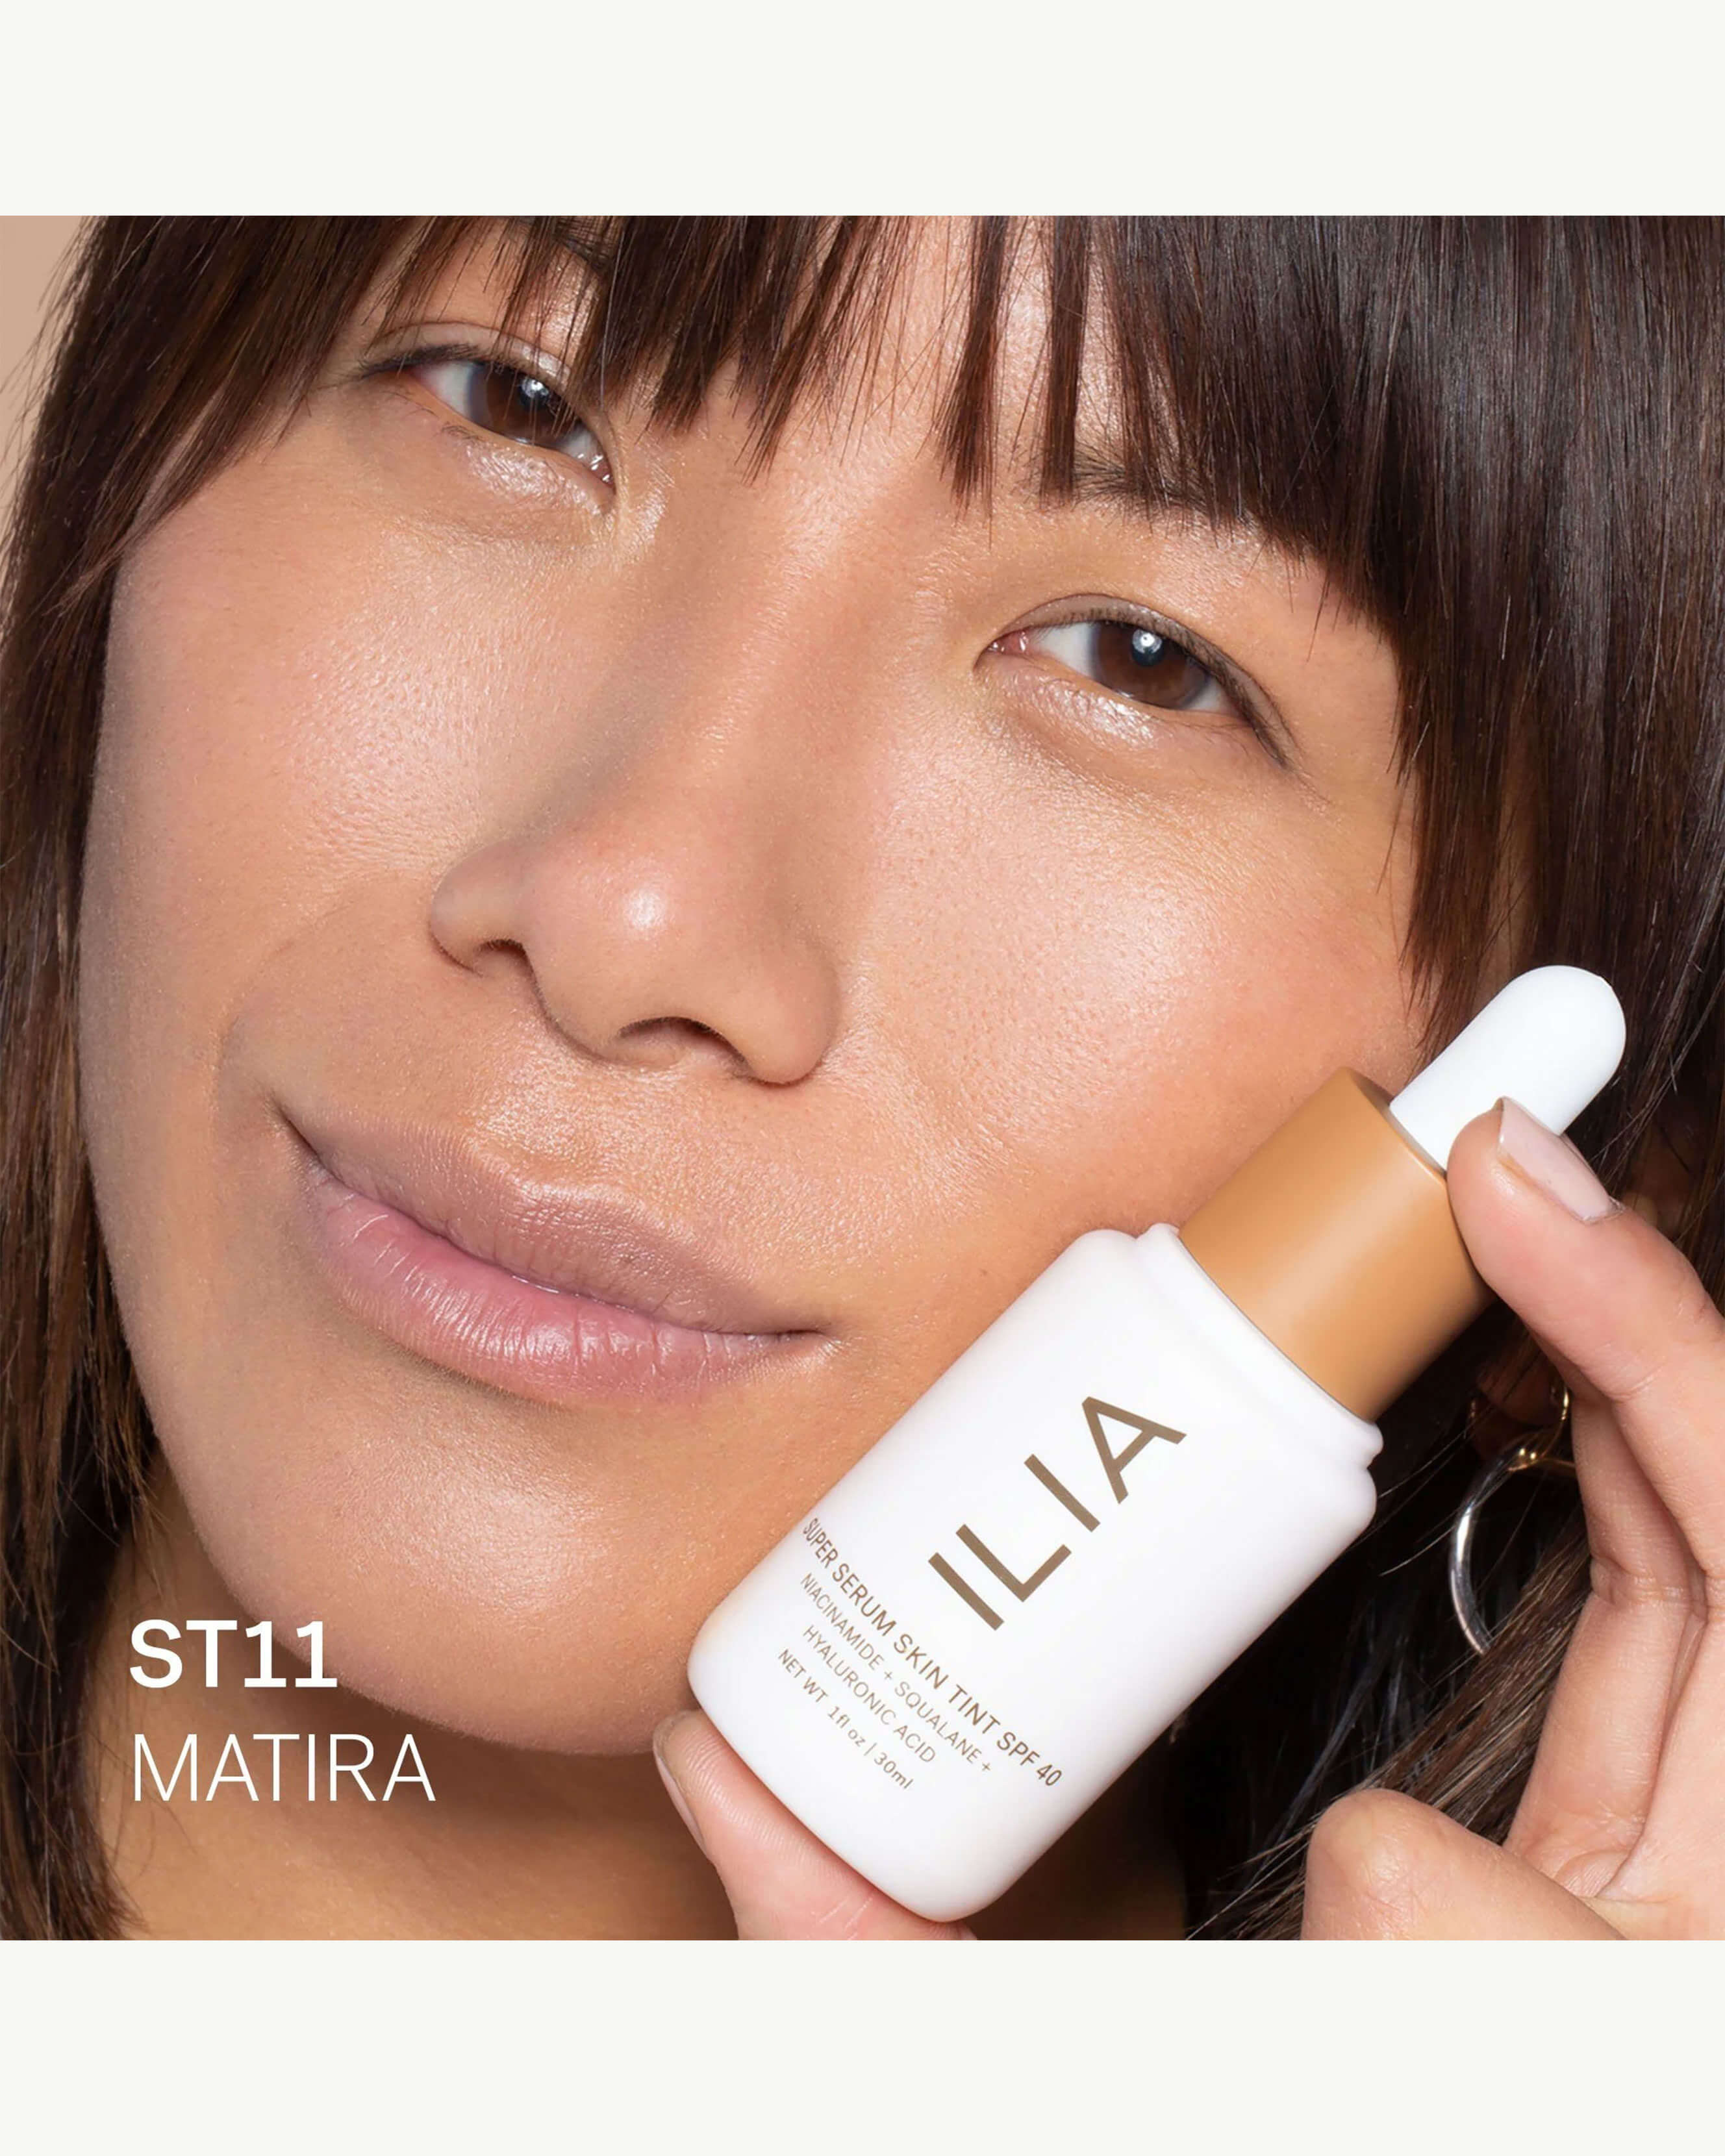 ST11 Matira (for medium-tan skin with cool undertones)